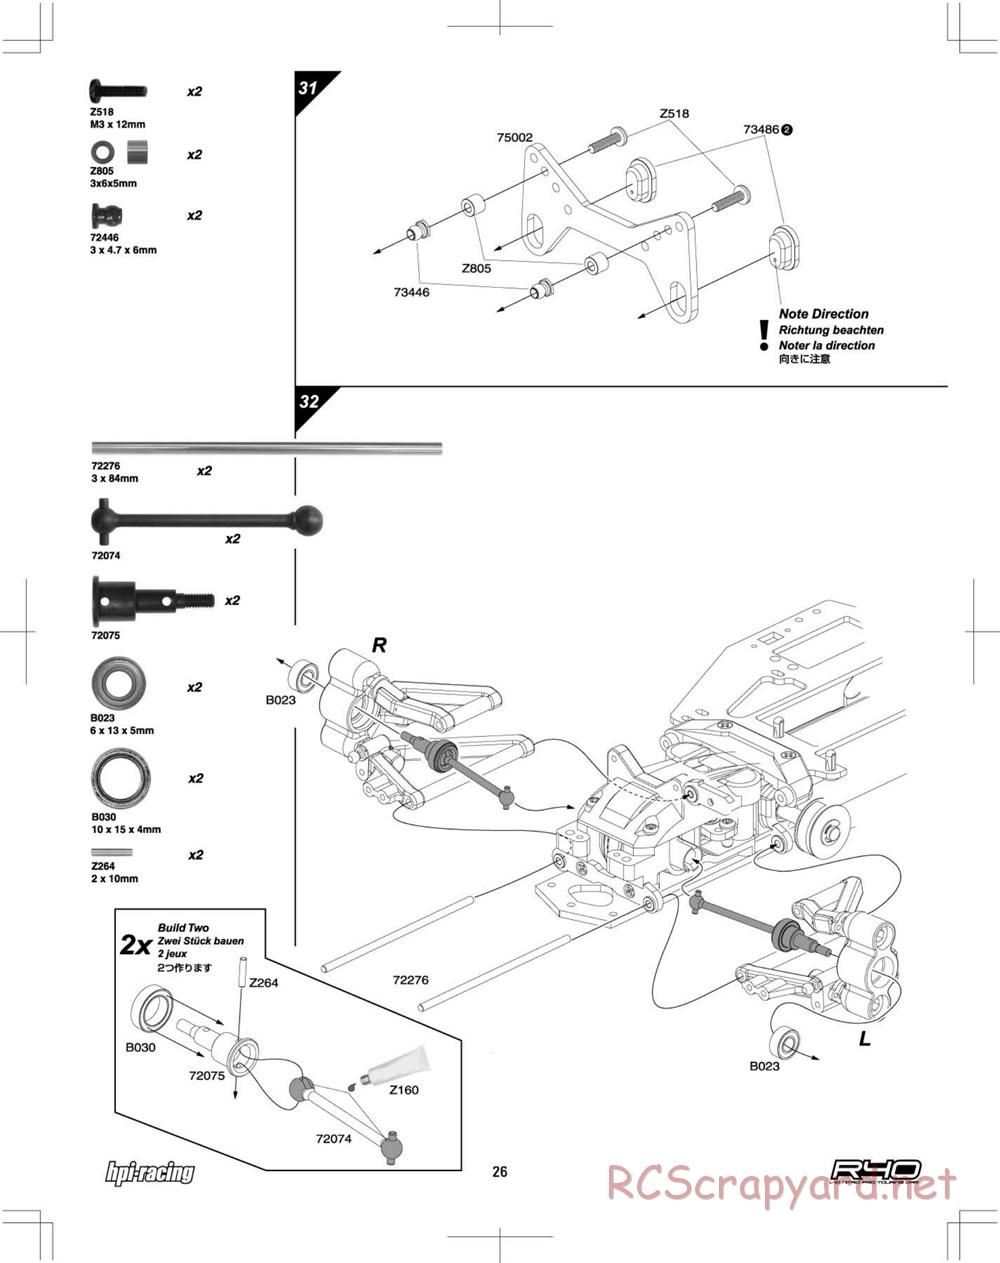 HPI - R40 Nitro Touring Car - Manual - Page 26